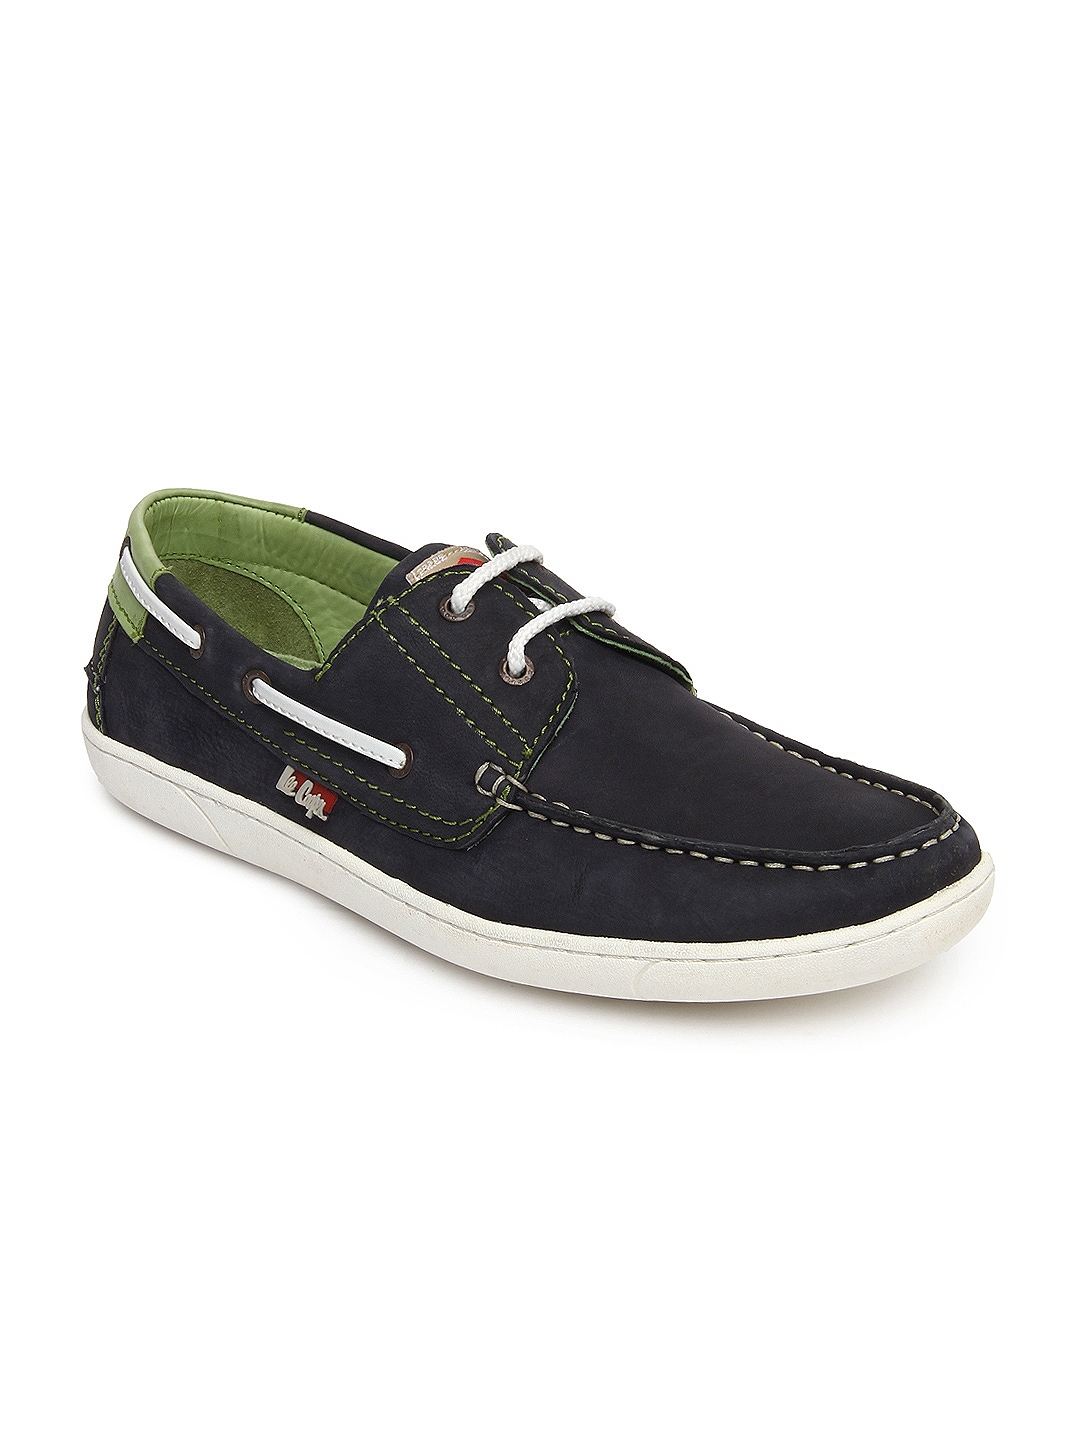 Buy Lee Cooper Men Dark Navy Leather Boat Shoes - Casual Shoes for Men ...